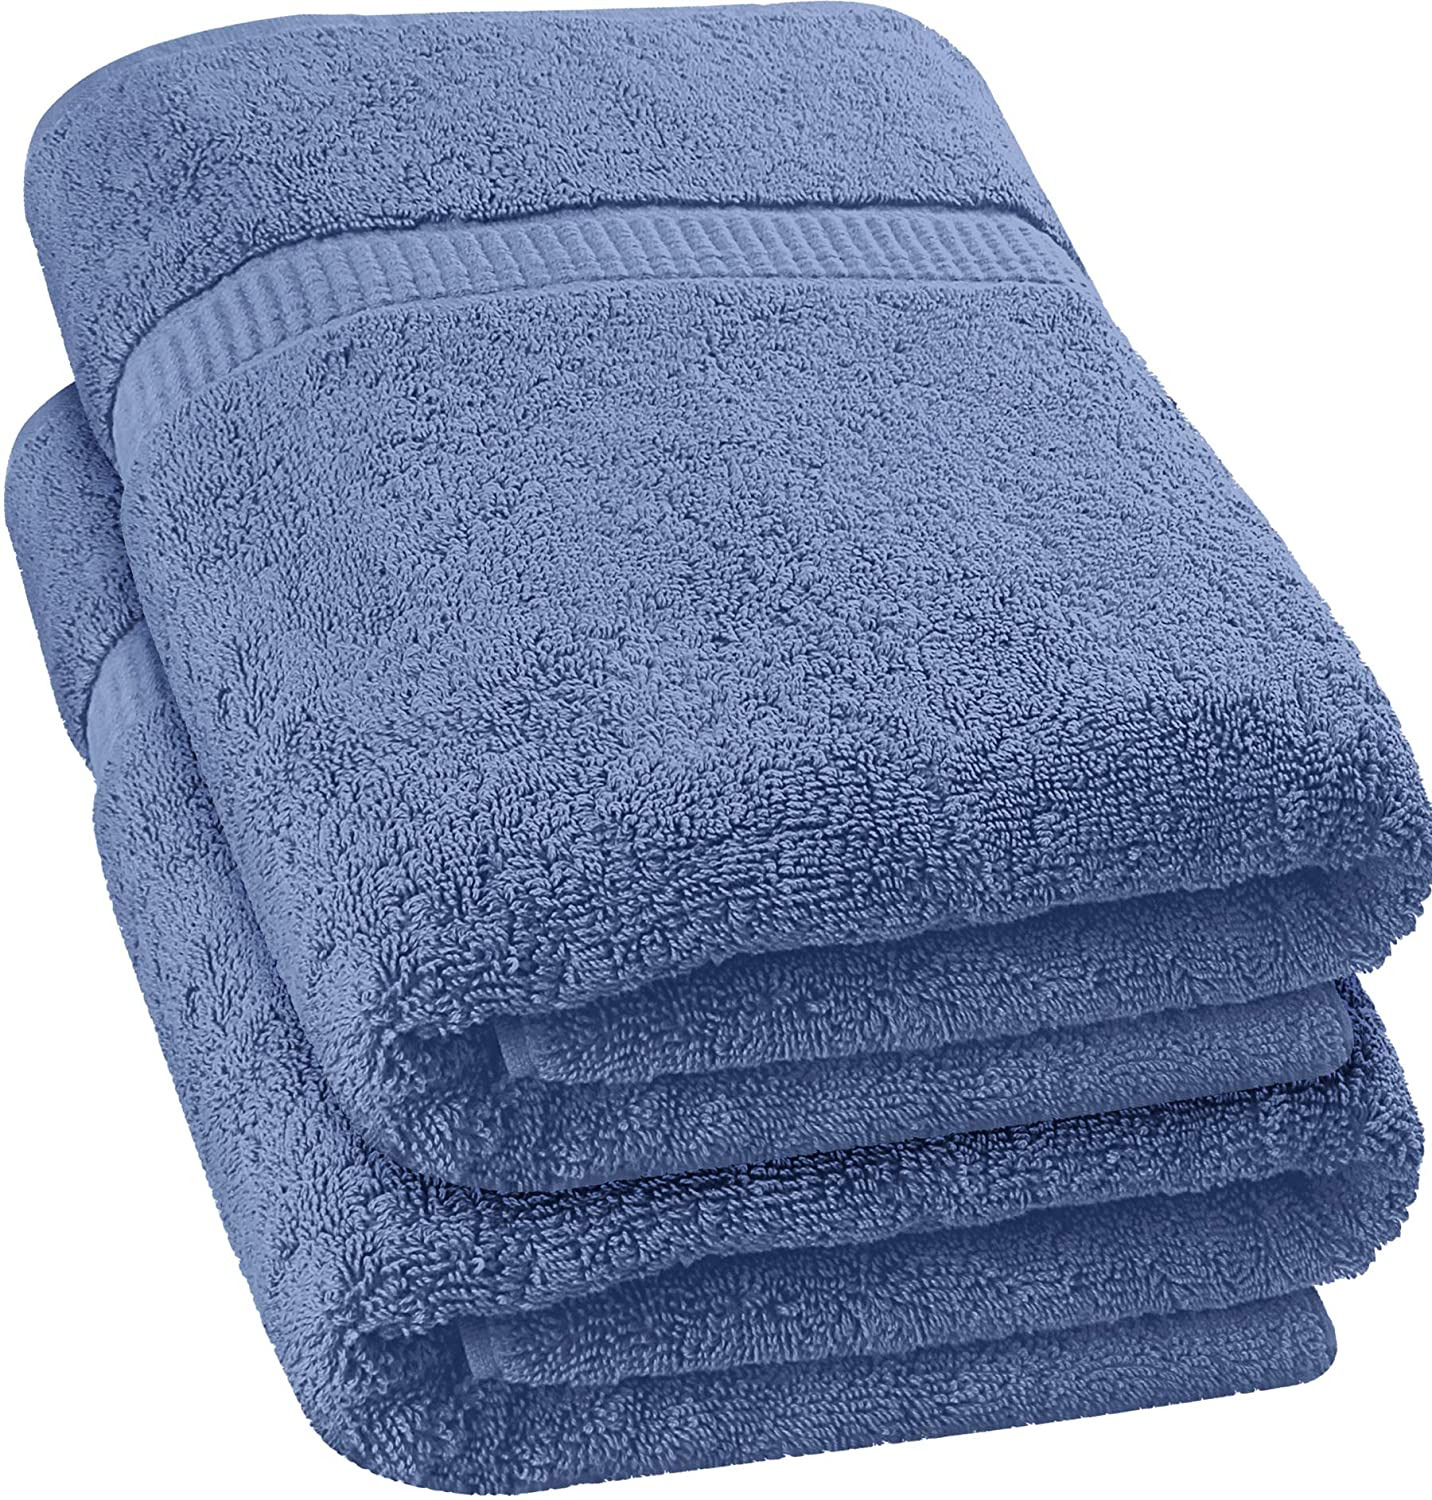 Utopia Towels - Luxurious Jumbo Bath Sheet 35x70 Inches, Electric Blue - 600 Gsm